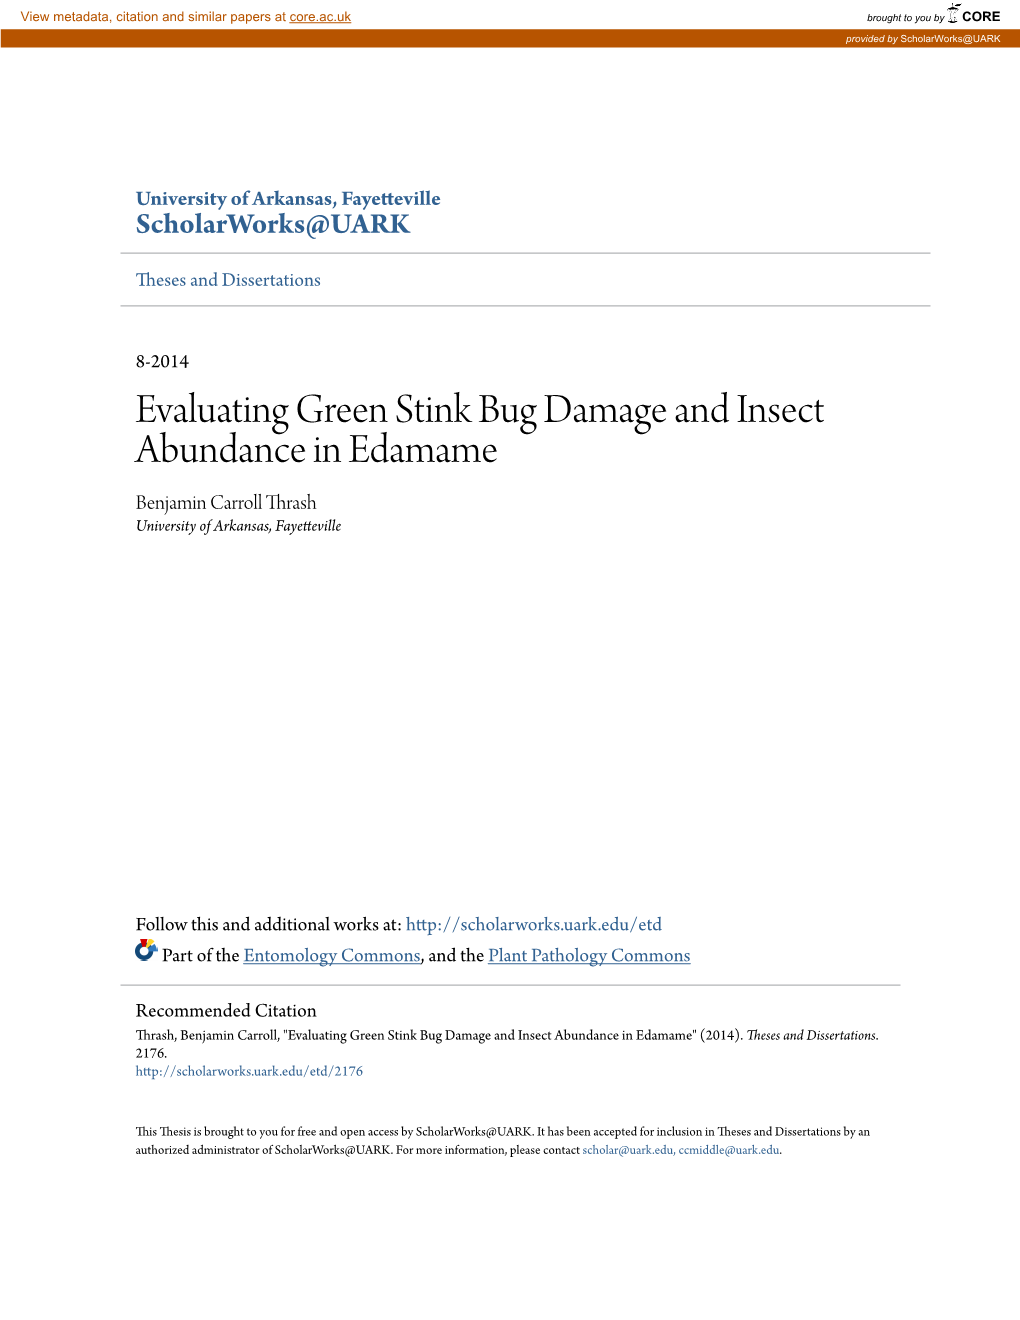 Evaluating Green Stink Bug Damage and Insect Abundance in Edamame Benjamin Carroll Thrash University of Arkansas, Fayetteville